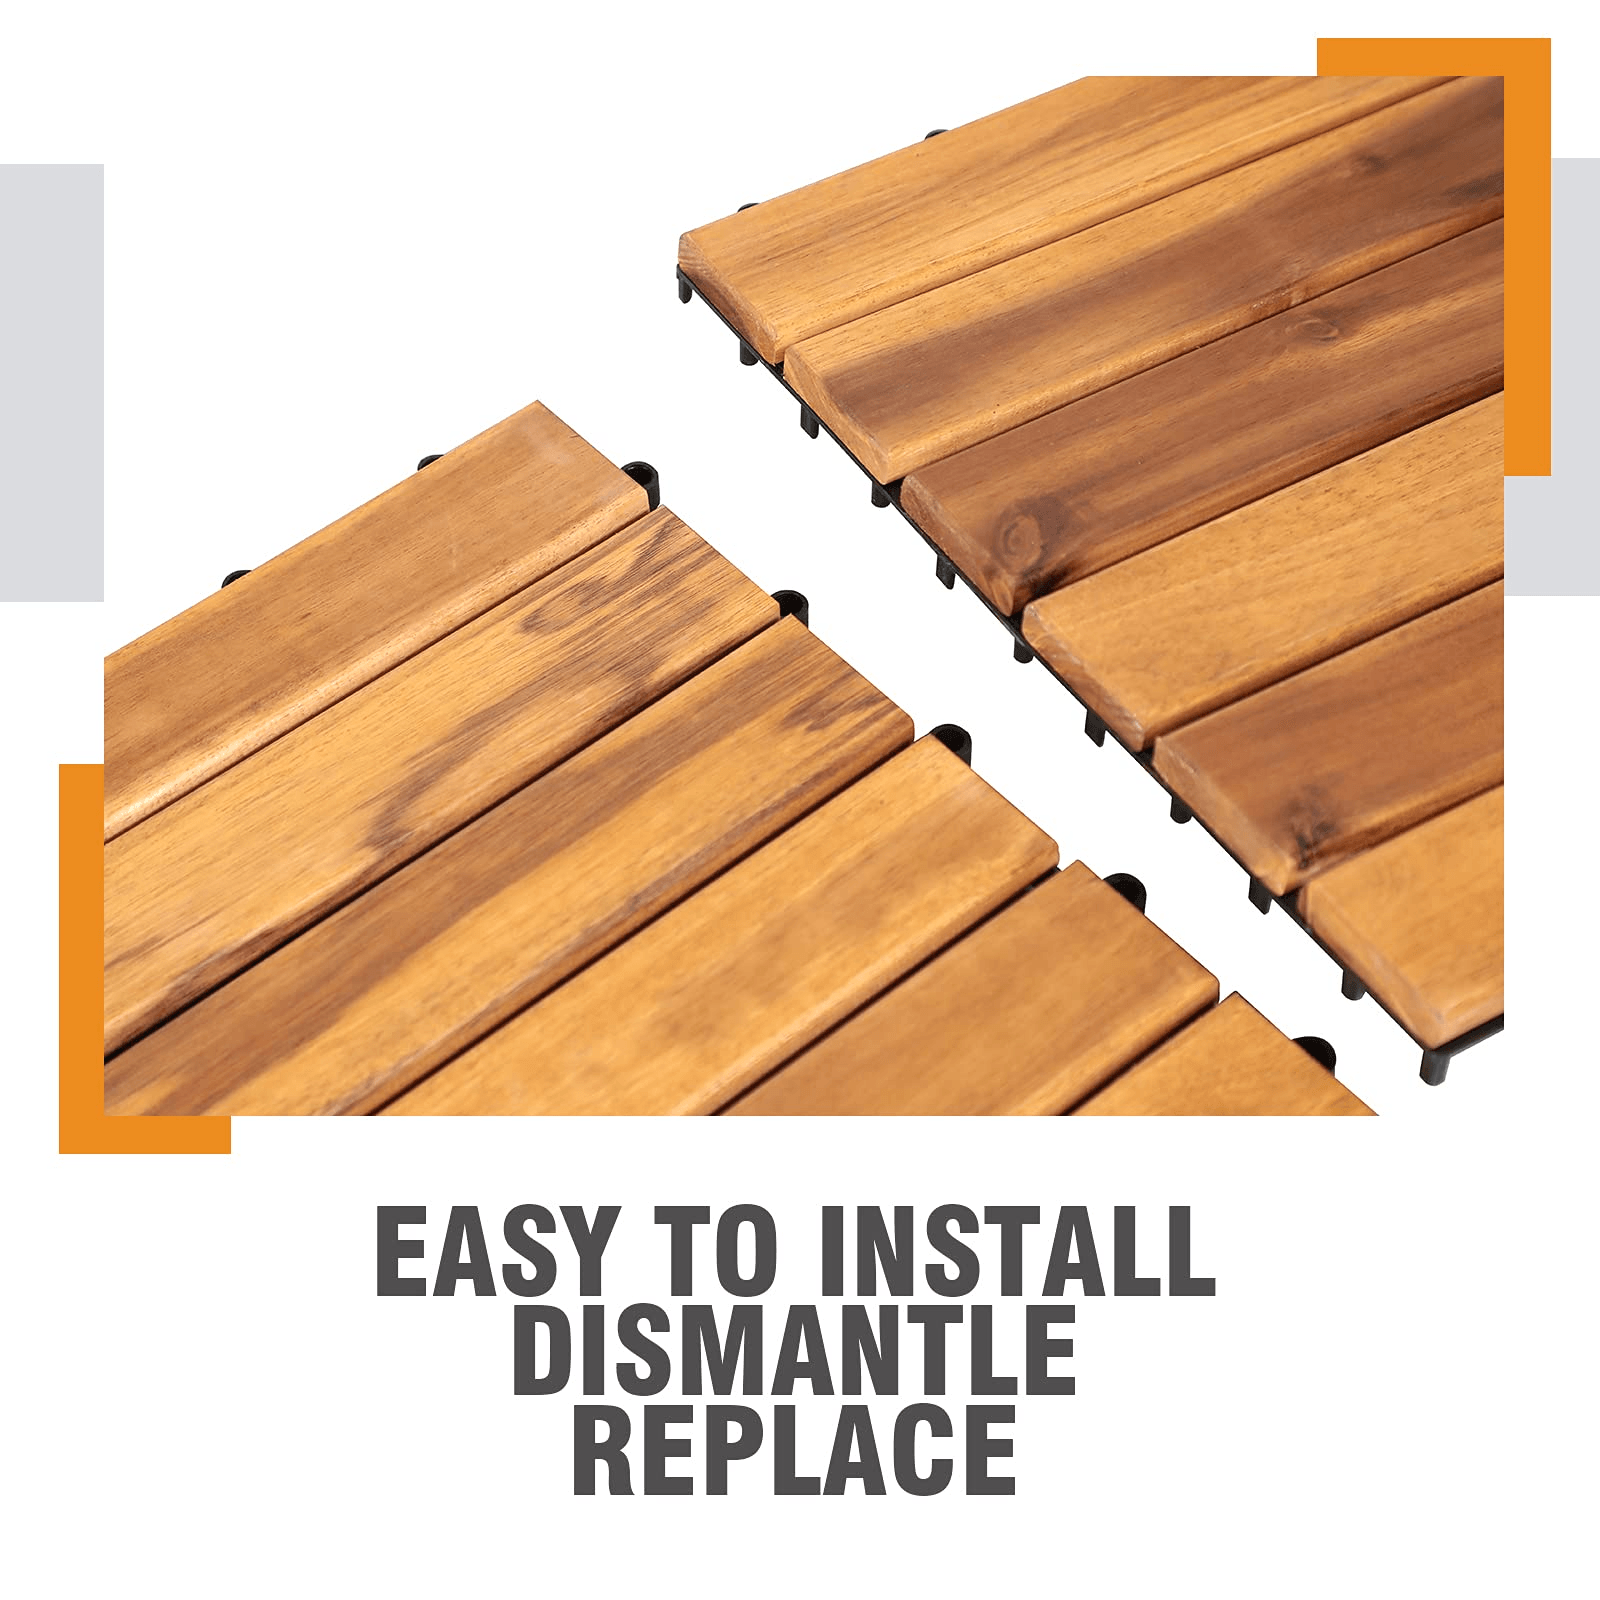 Easyfashion 12 inch x 12 inch Interlocking Wooden Floor Tiles Outdoor and Indoor 11 Pieces Brown Size 12.1 x 12.1 x 1.0 Inc